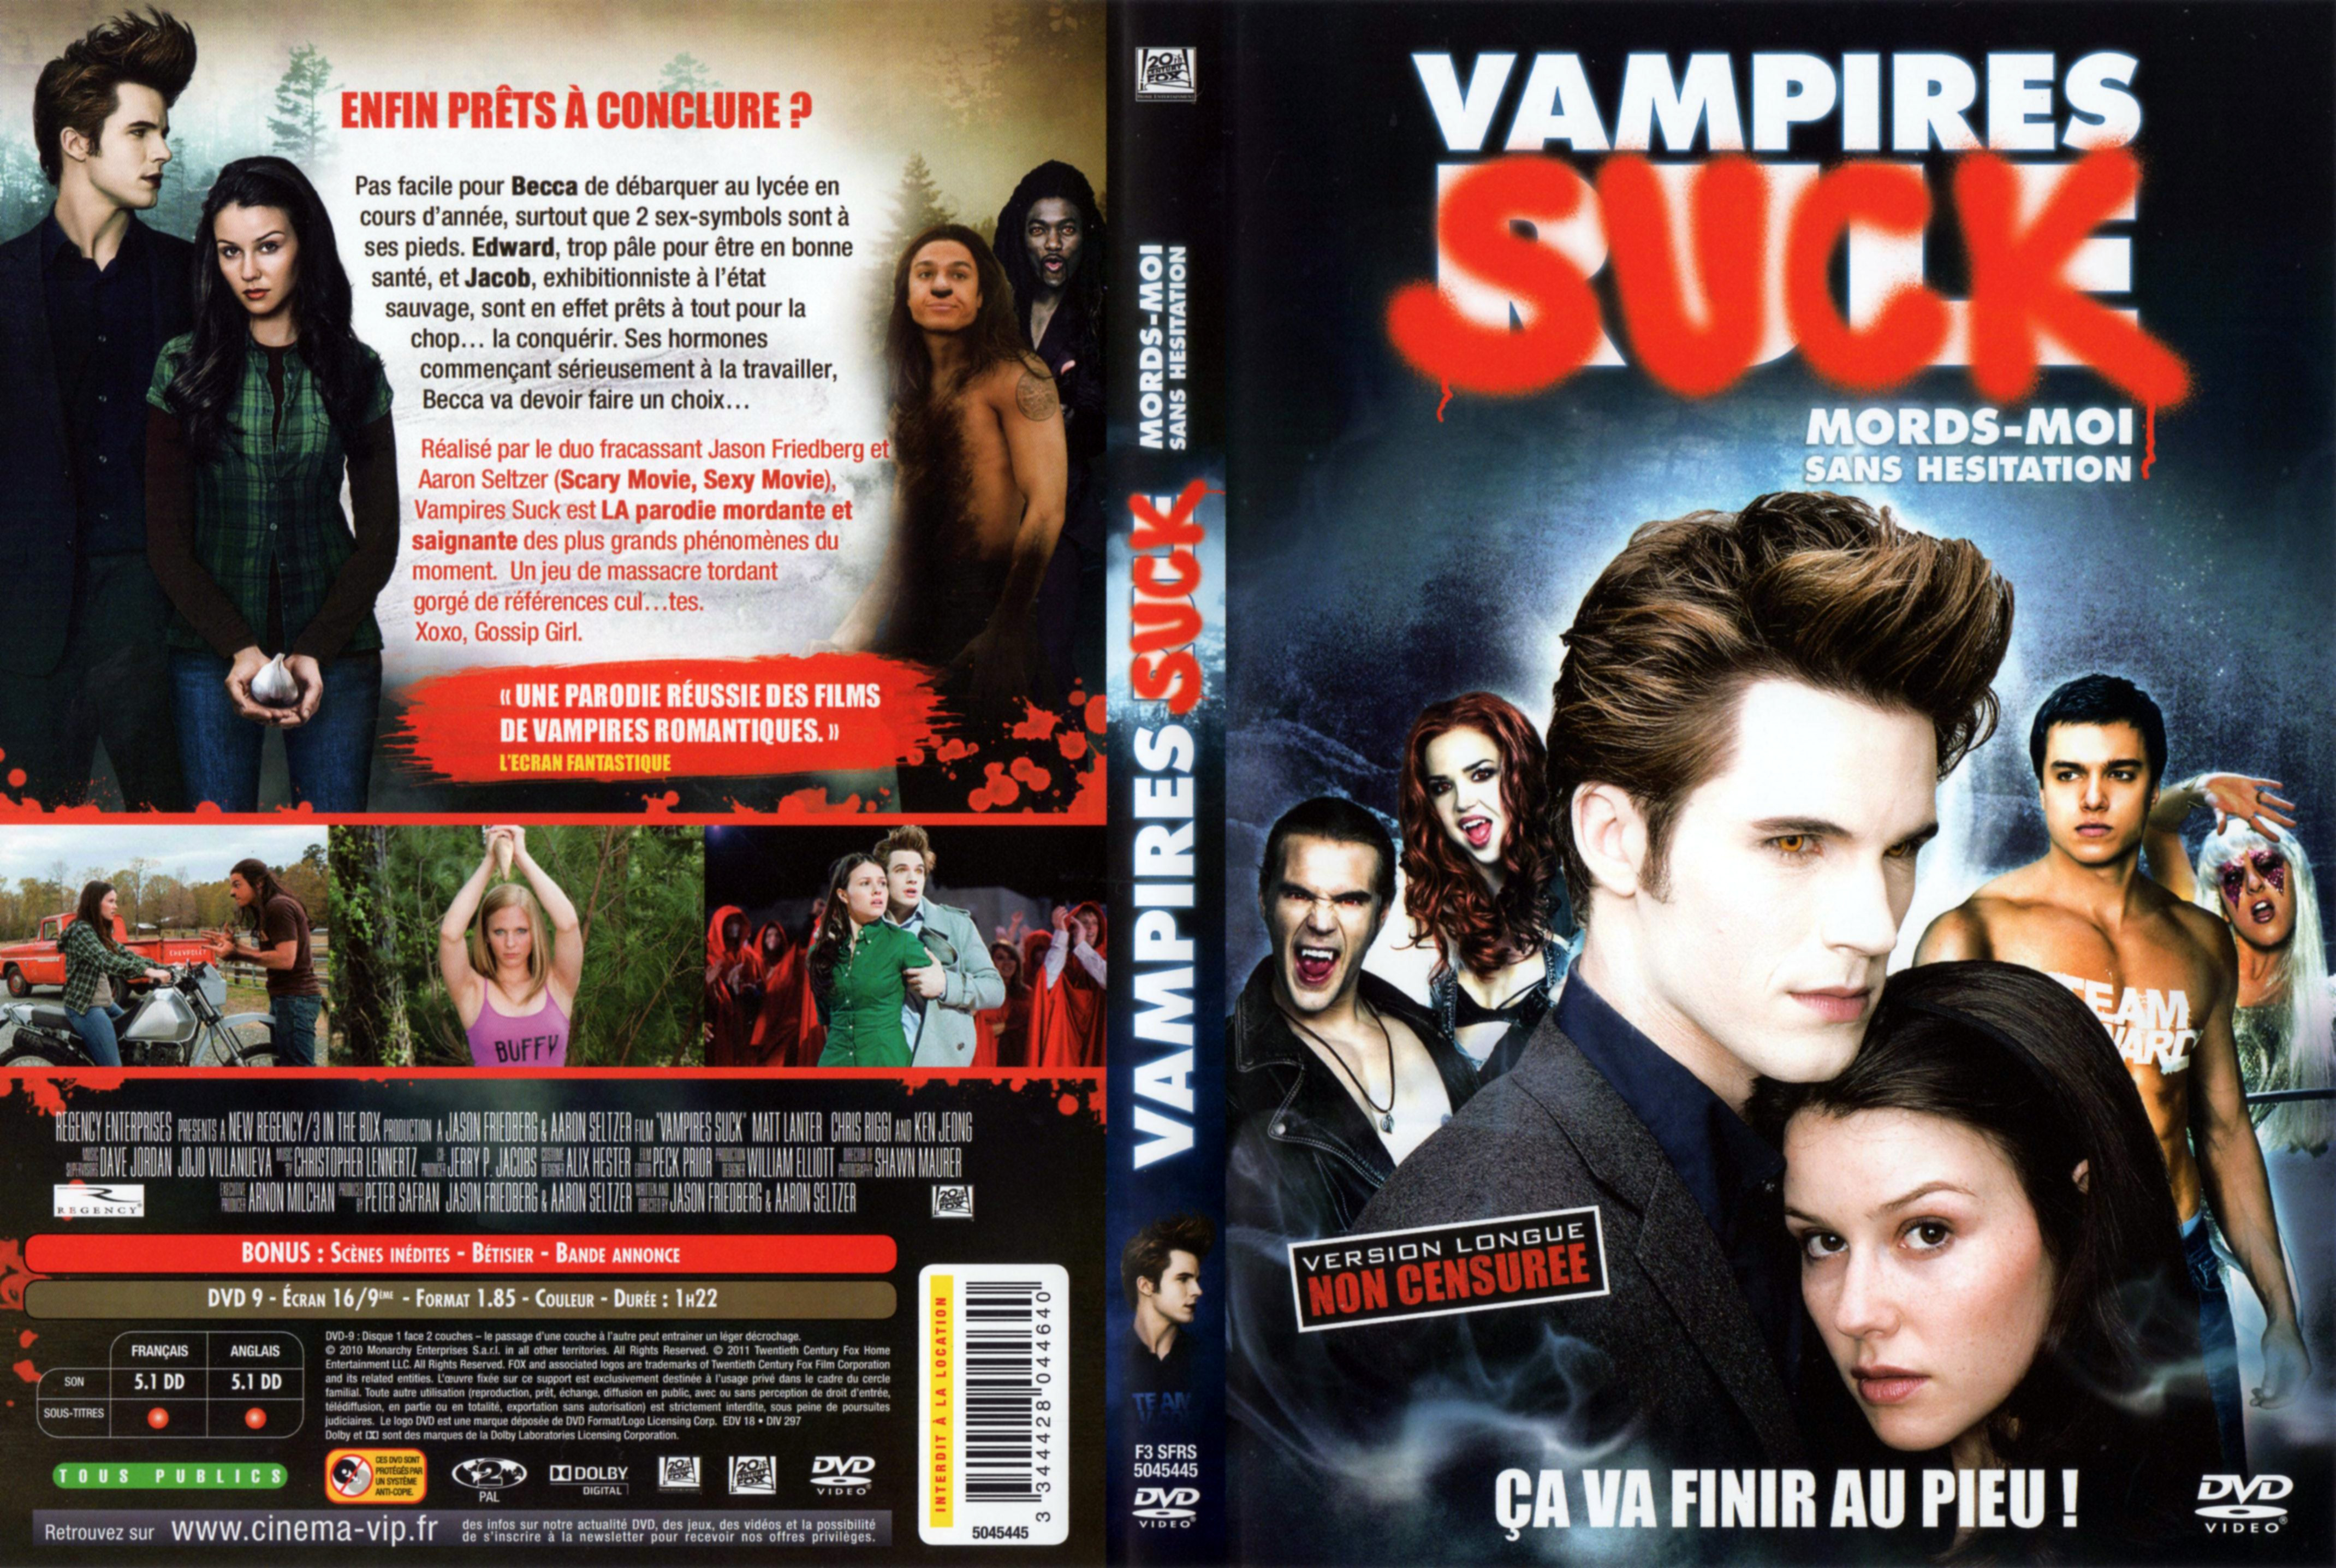 Jaquette DVD Vampires suck - Mords-moi sans hsitation